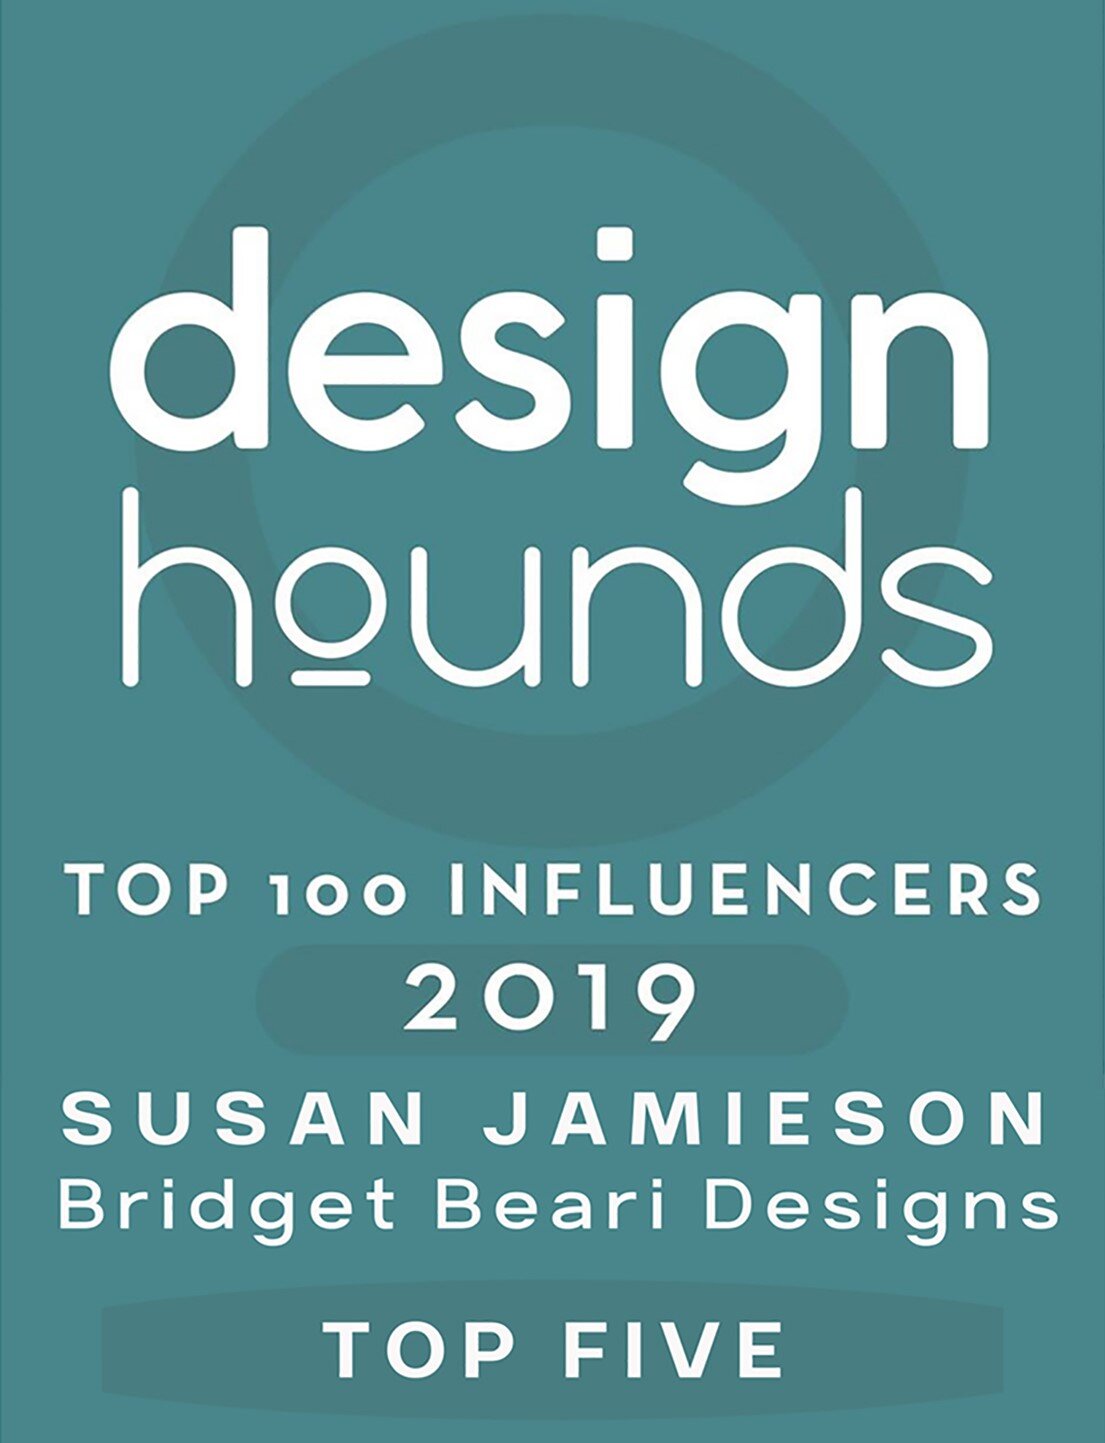 SusanJamieson_BBD_Designhounds_TOP-5-INFLUENCERS.jpg